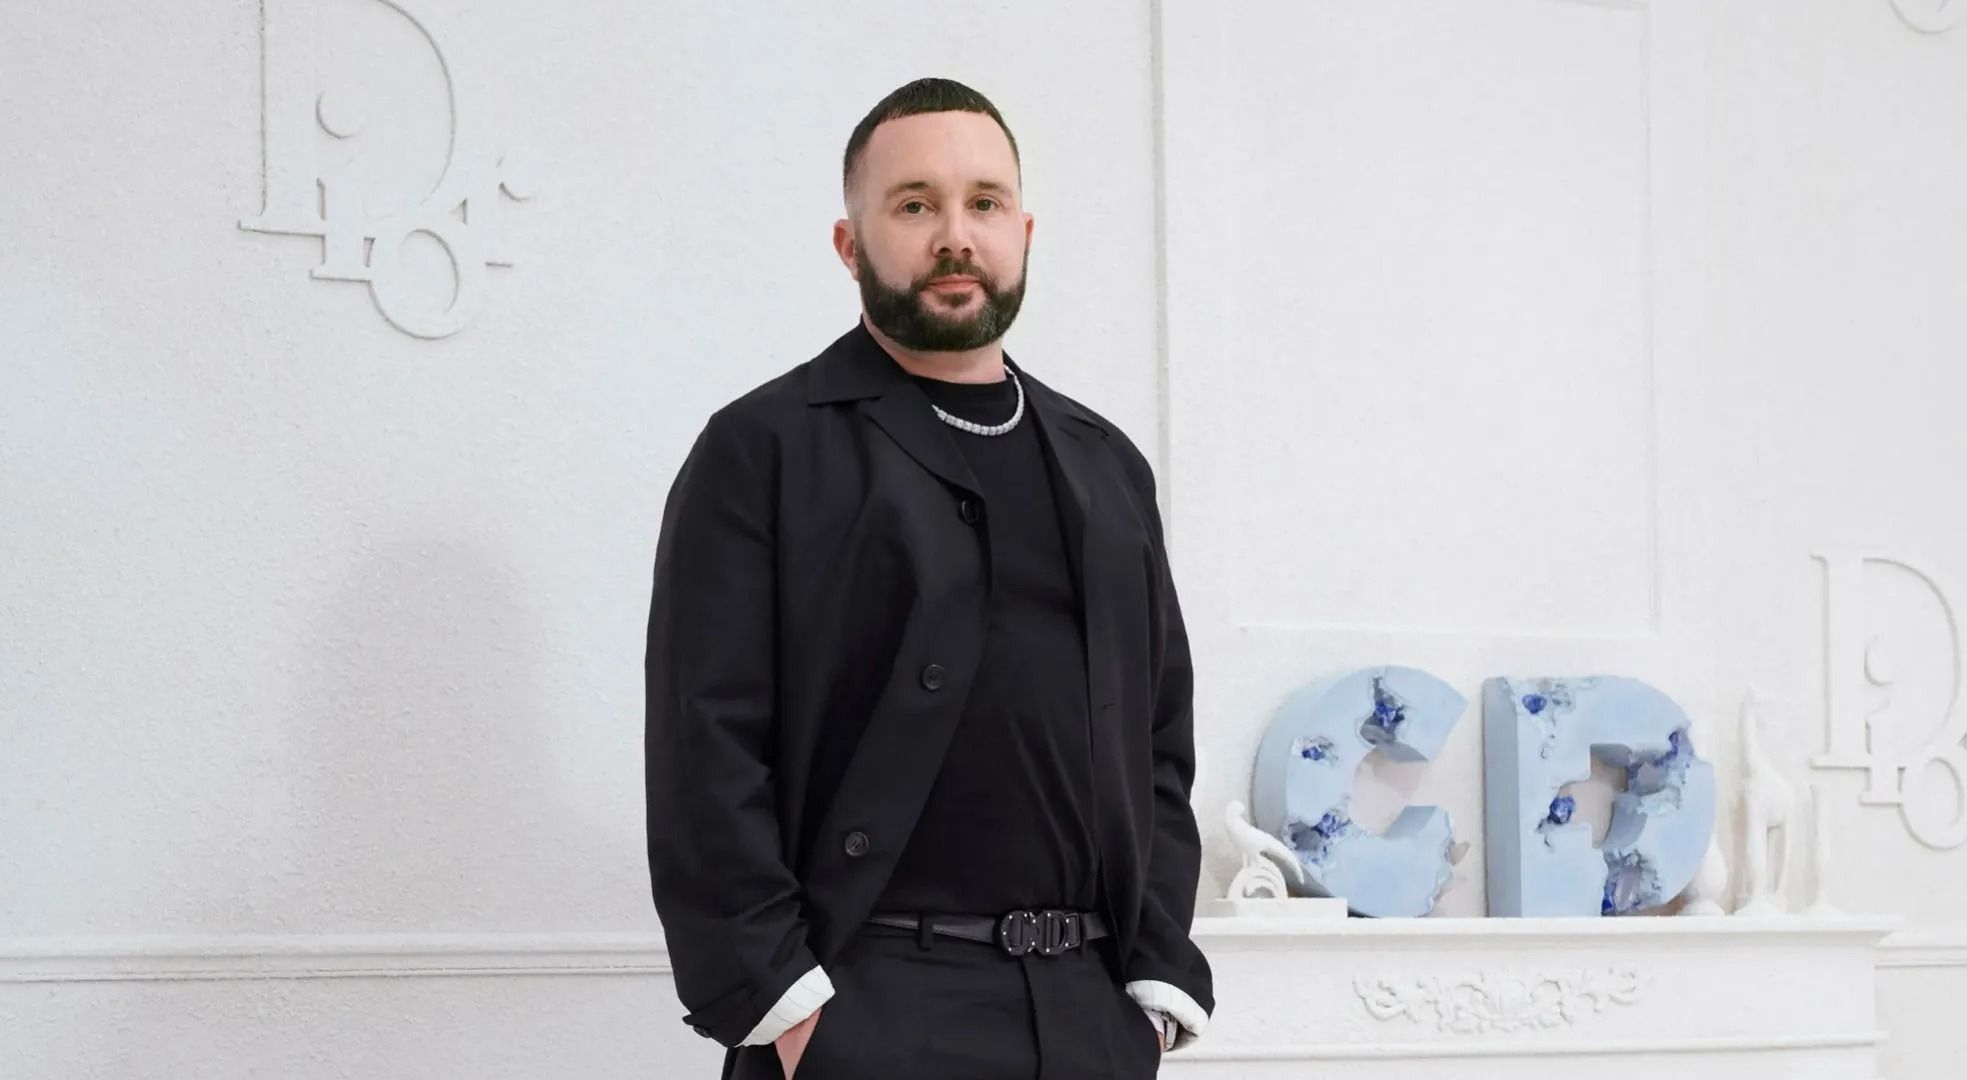 Dior Homme designer Kim Jones kicks back with Alist fashion crowd